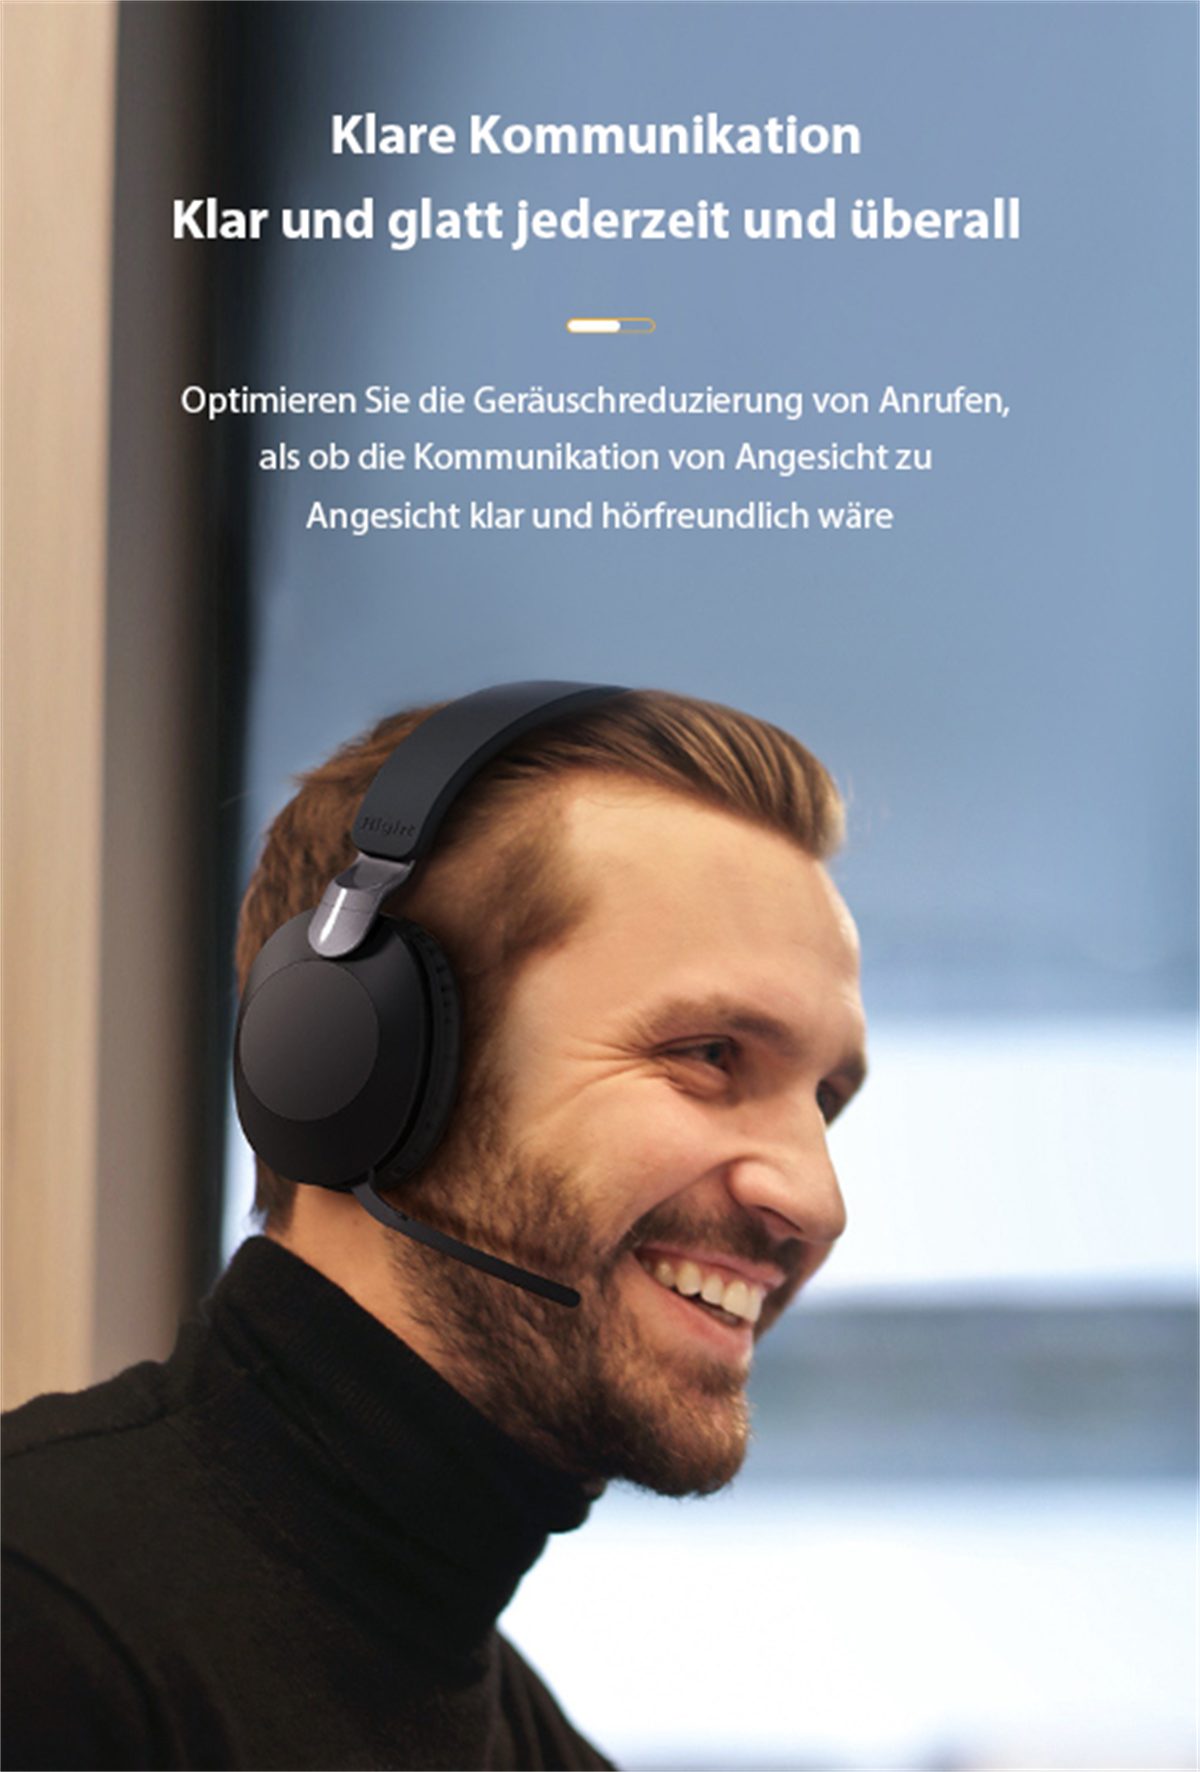 befestigtes Bluetooth-Gaming-Headset carefully Kopf Over-Ear-Kopfhörer selected Am mit Akkulaufzeit blau langer Navy